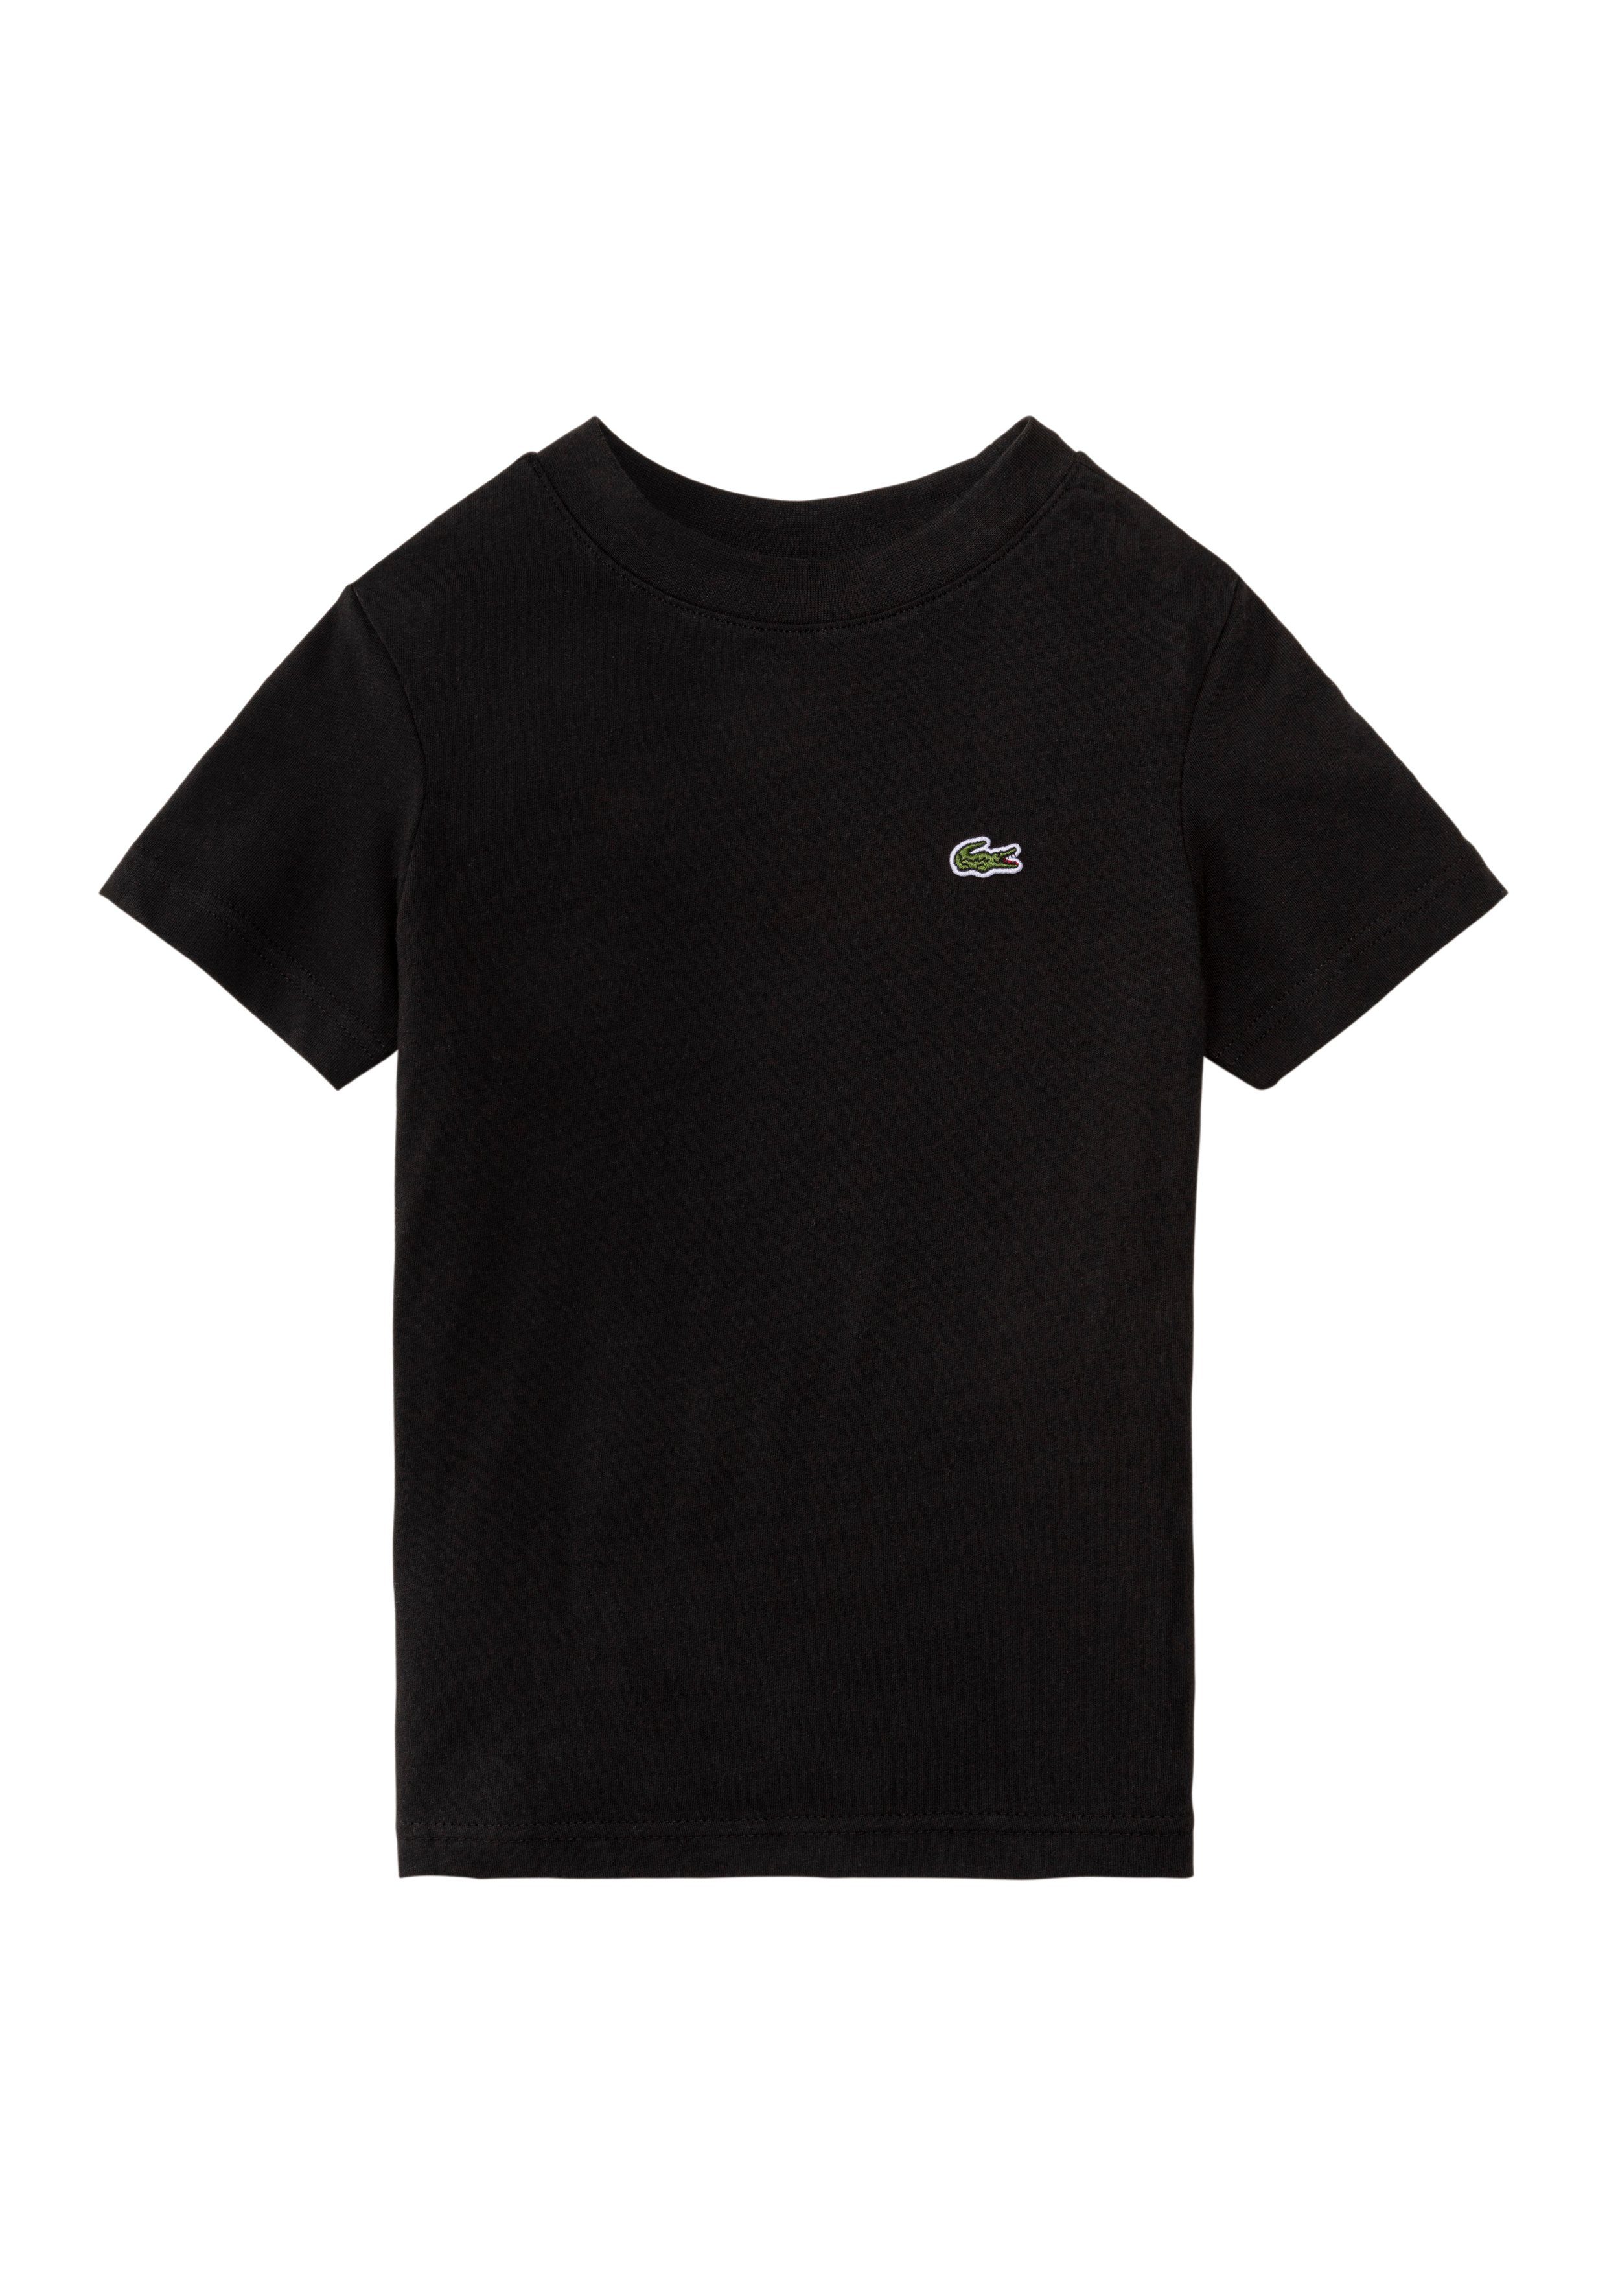 Lacoste T-Shirt mit auf schwarz Brusthöhe Lacoste-Krokodil